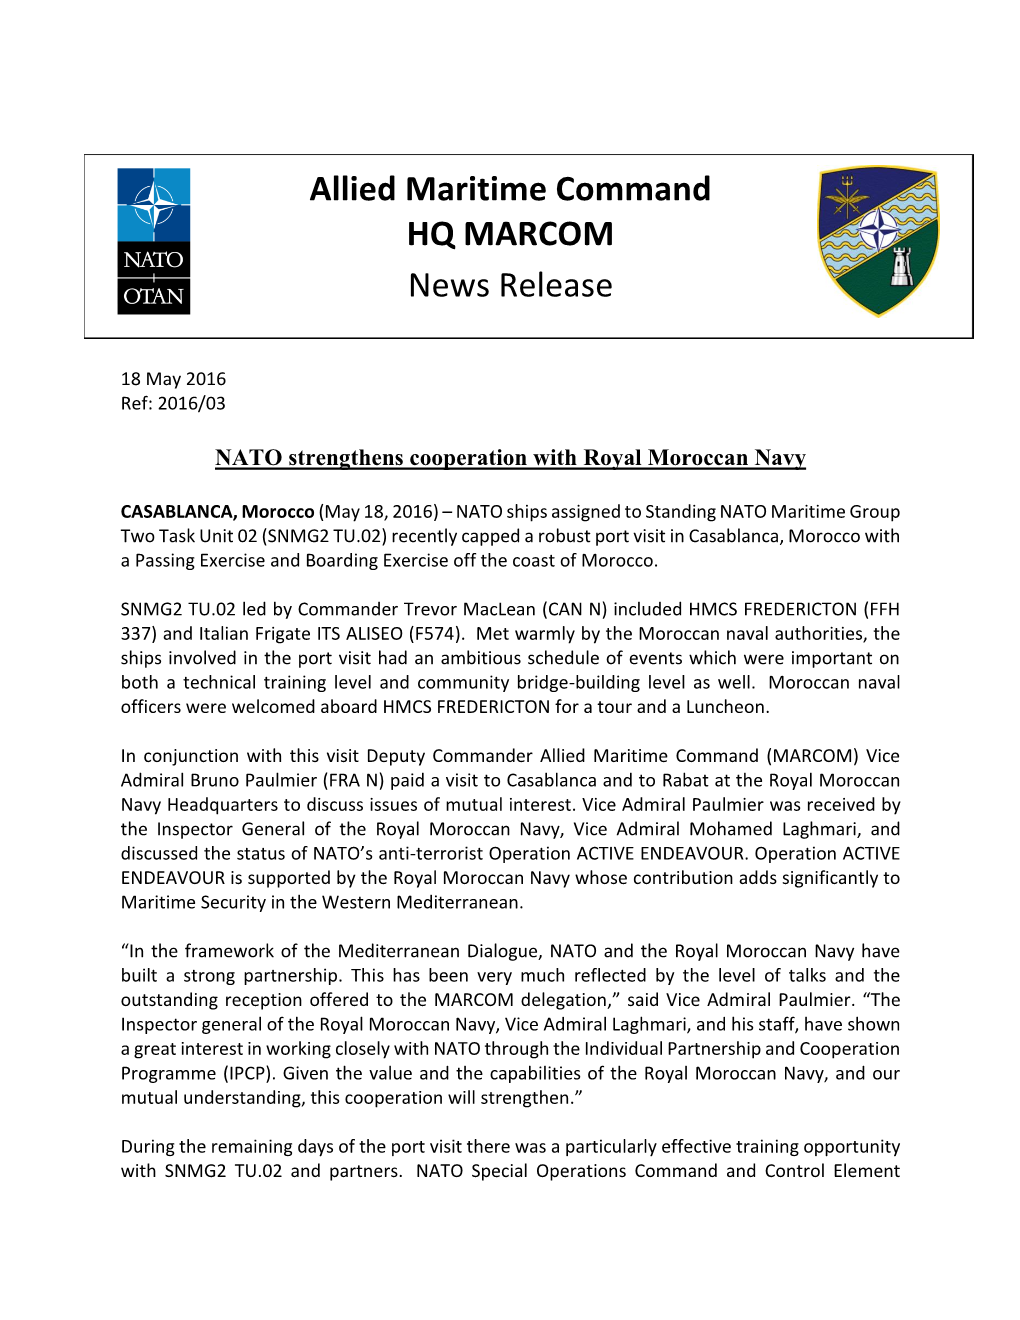 Allied Maritime Command HQ MARCOM News Release